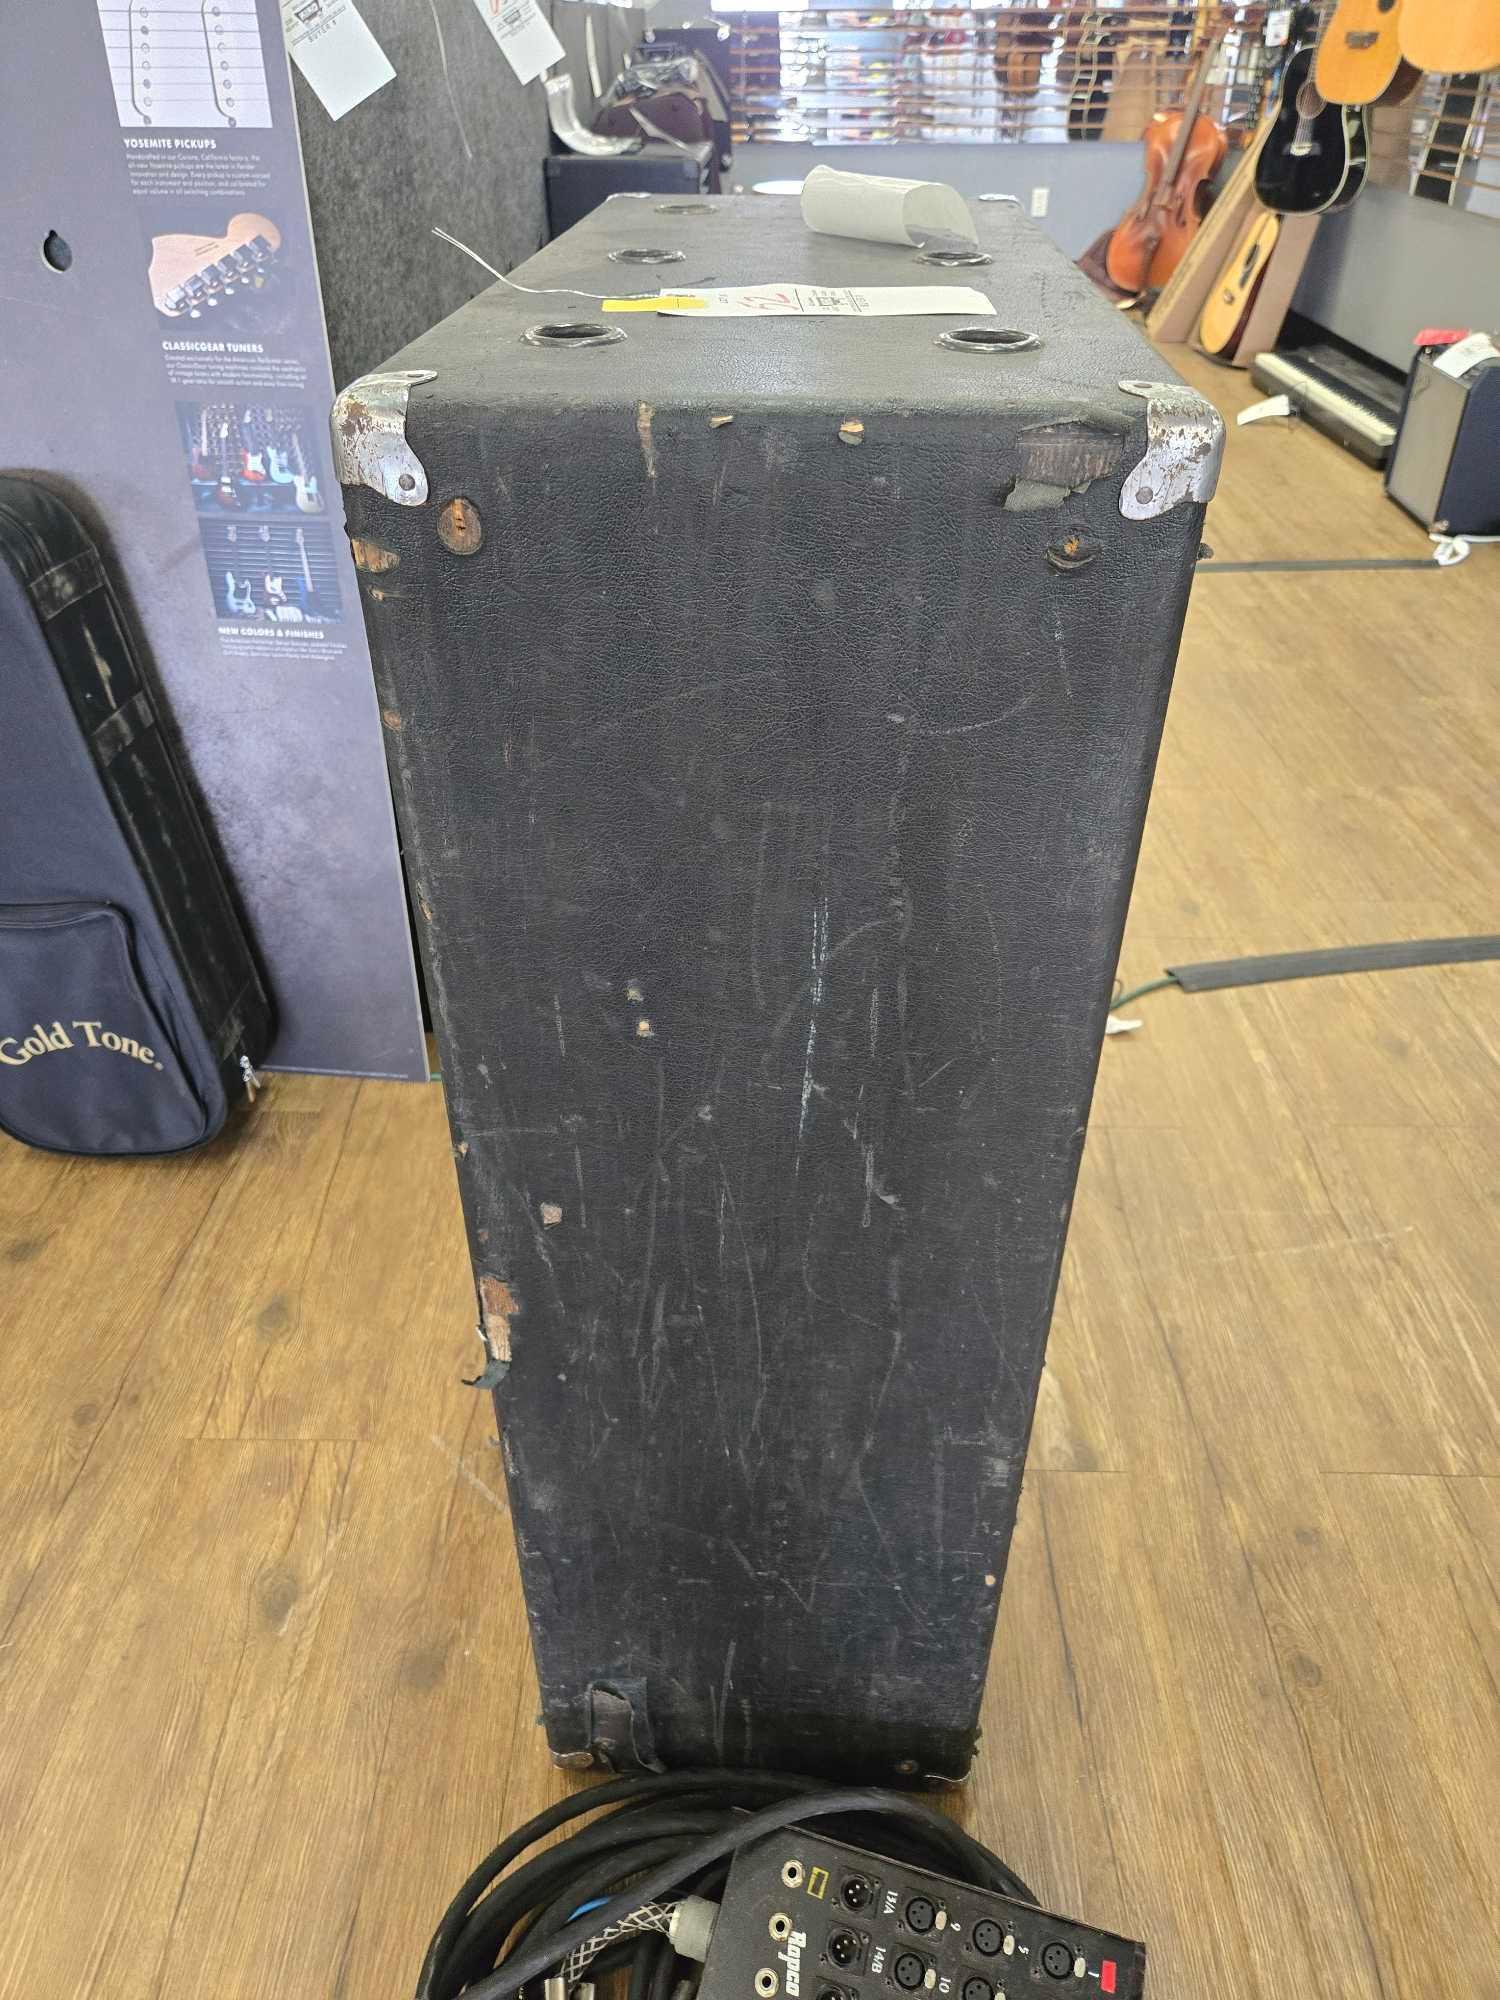 Ampeg Model B-25B Bass Cabinet w/Rapco Box Snake